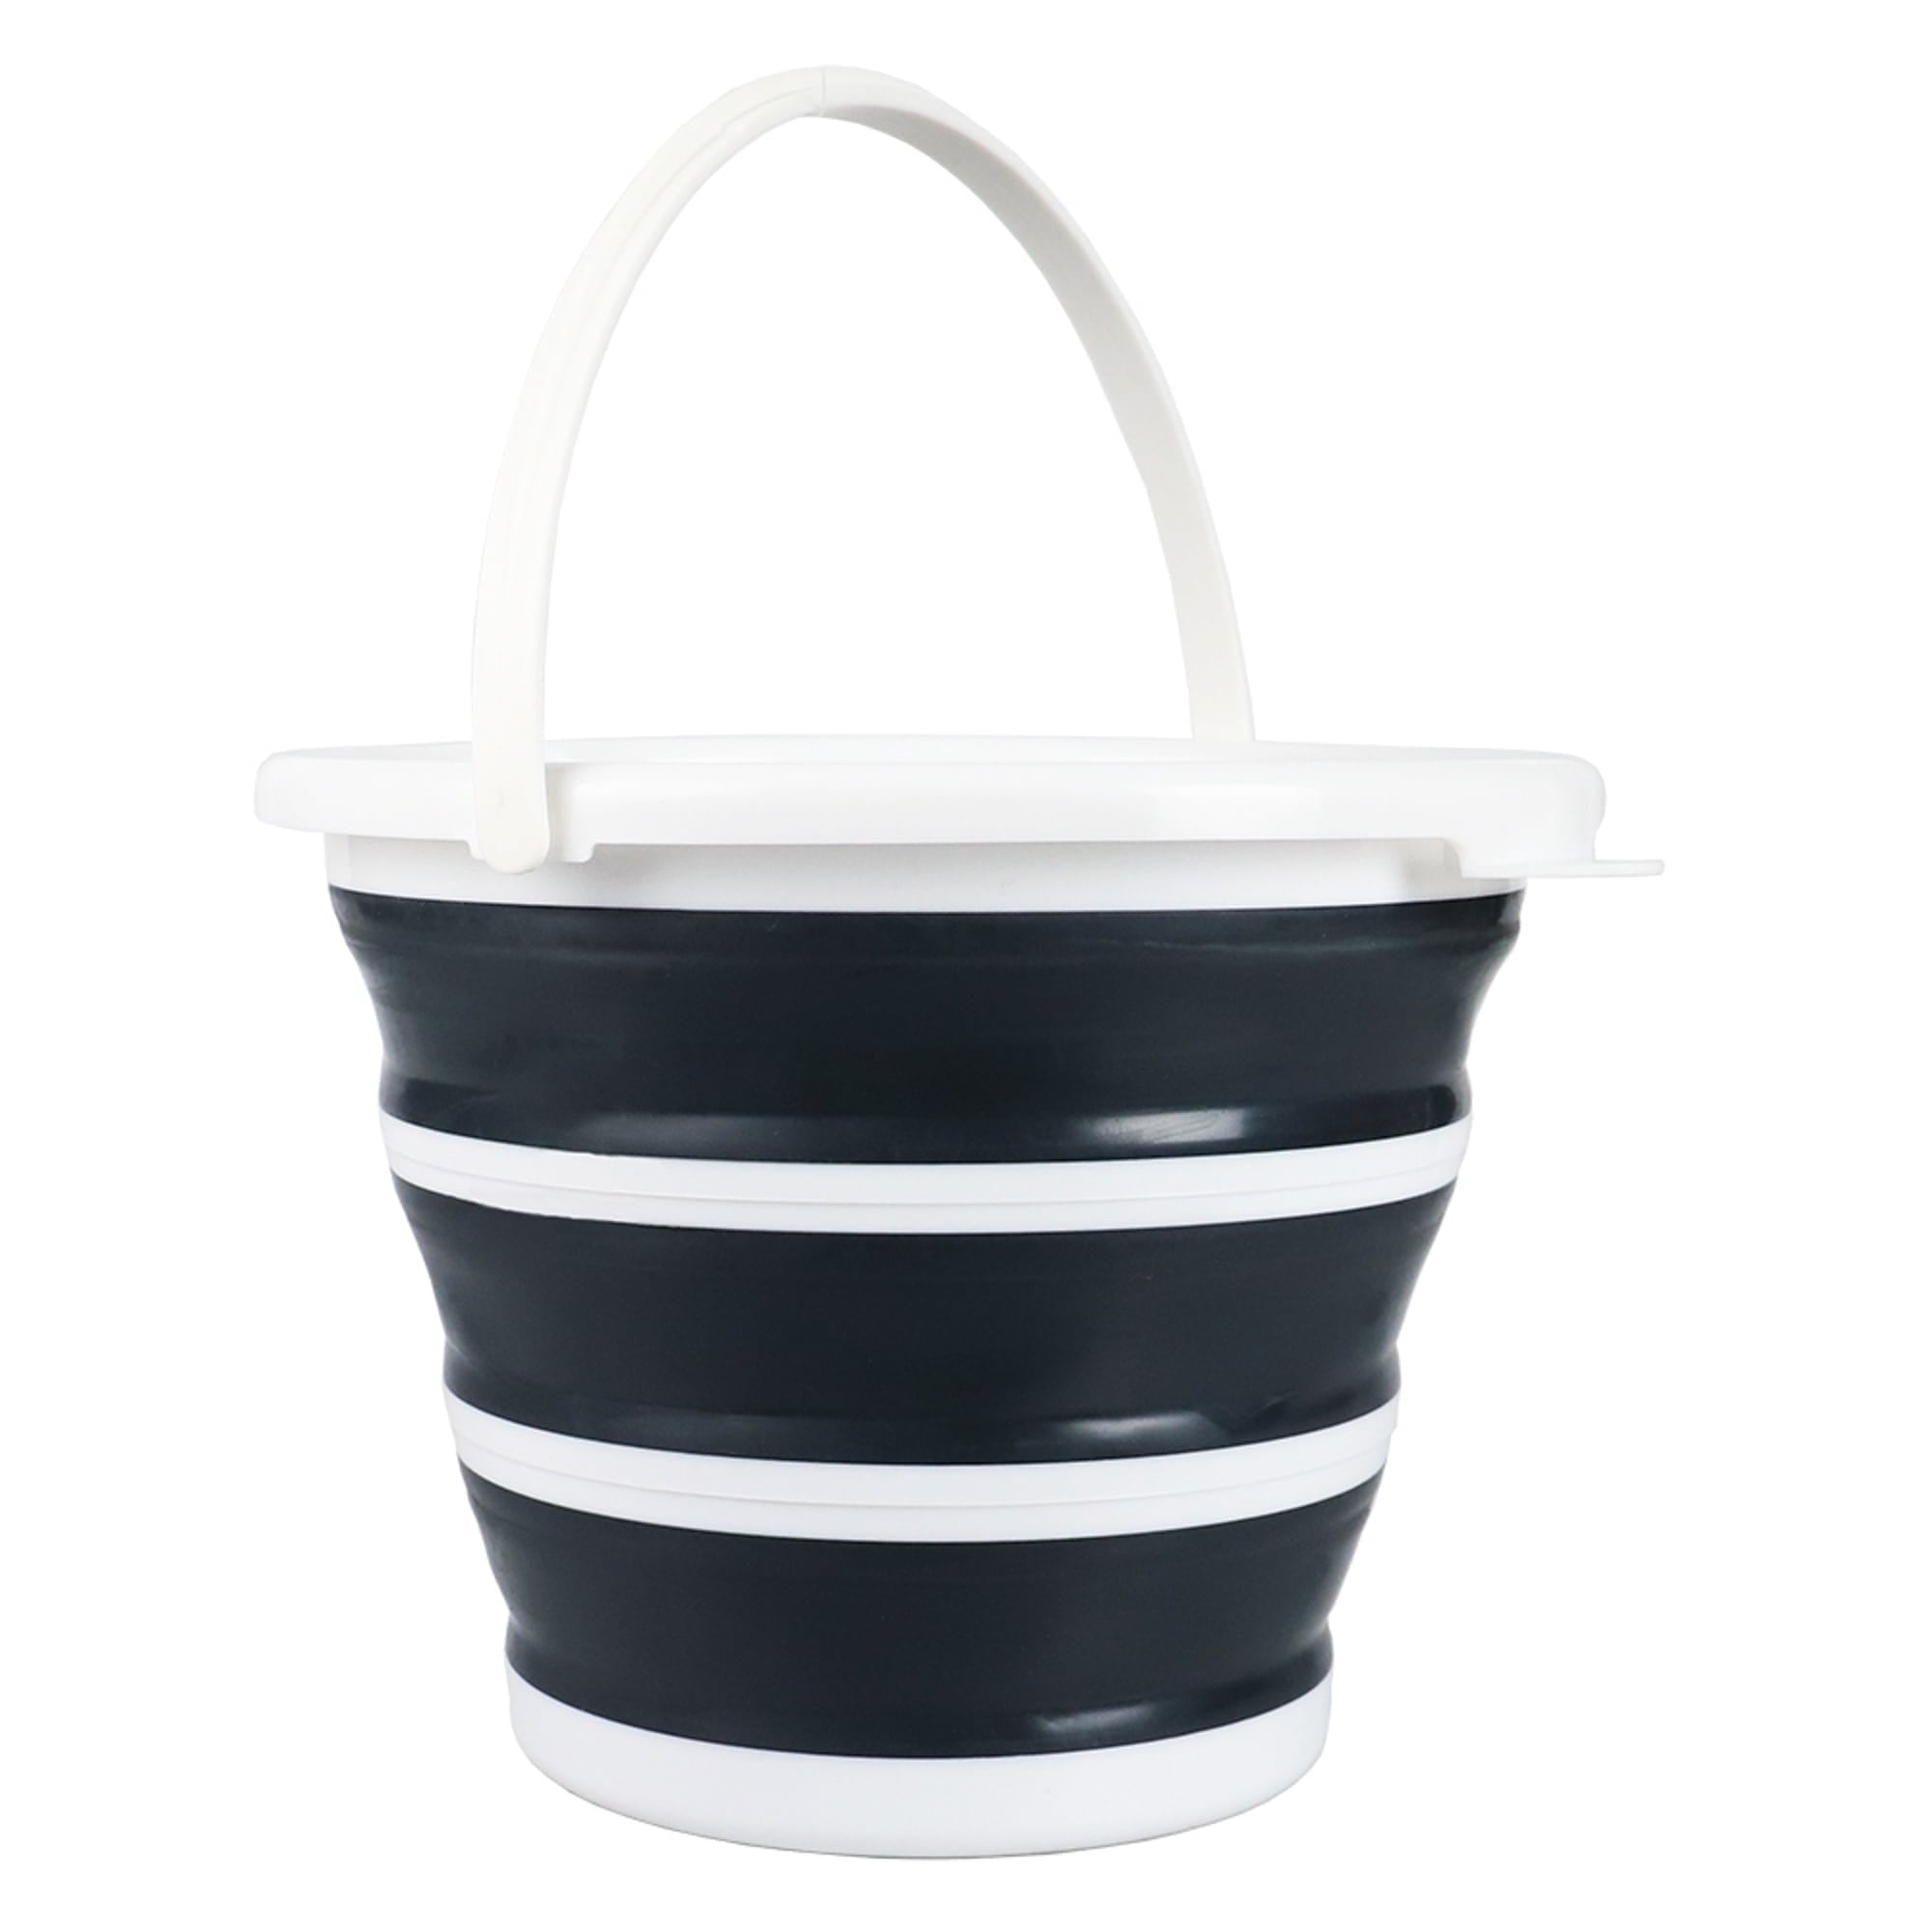 Home Basics 10 LT Collapsible Plastic Bucket, Black $5.00 EACH, CASE PACK OF 12